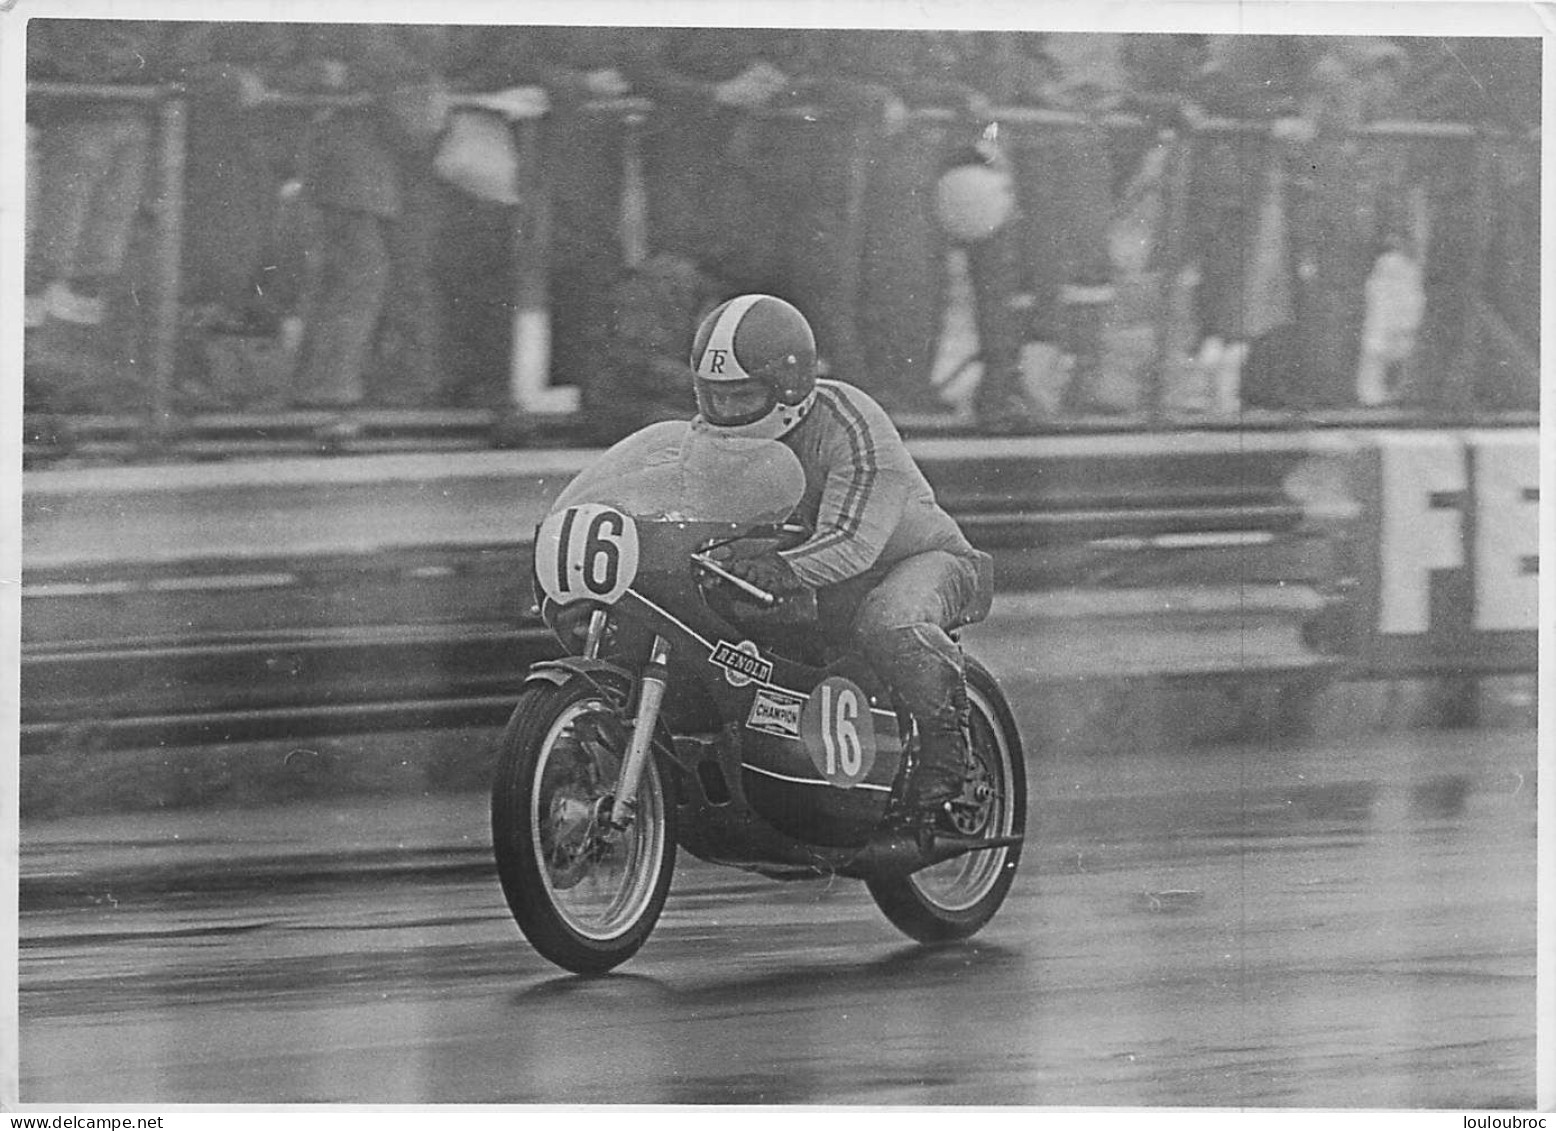 PILOTE  MOTO  TONY RUTTER COURSE ANNEE 1974 YAMAHA 350CC  RACE OF THE YEAR PHOTO DE PRESSE ORIGINALE 18X13CM - Sports